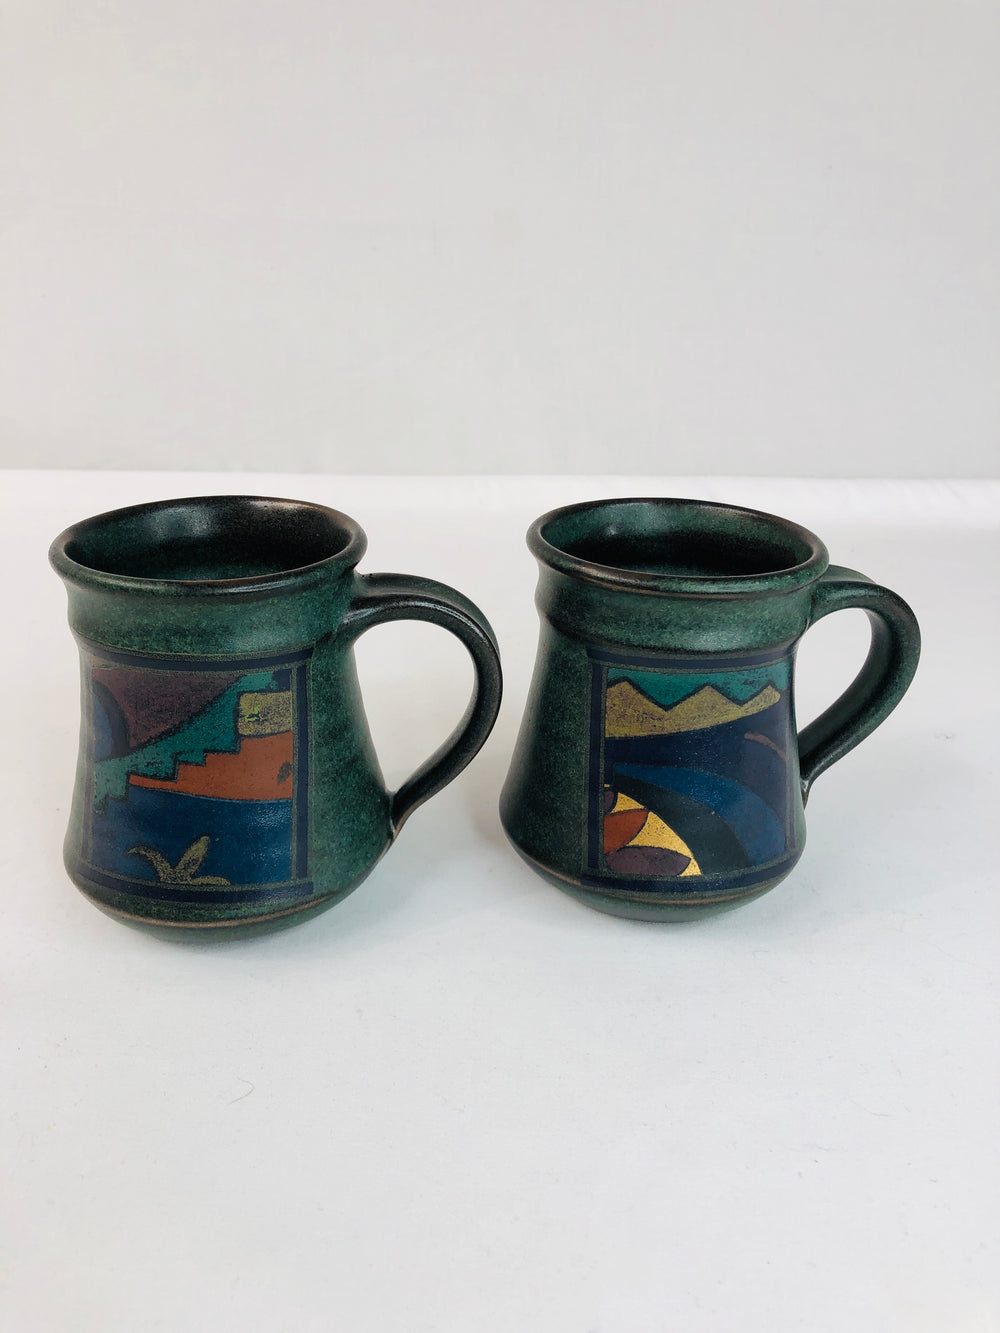 Paul Laird - 2 x Pottery Mugs (17319)